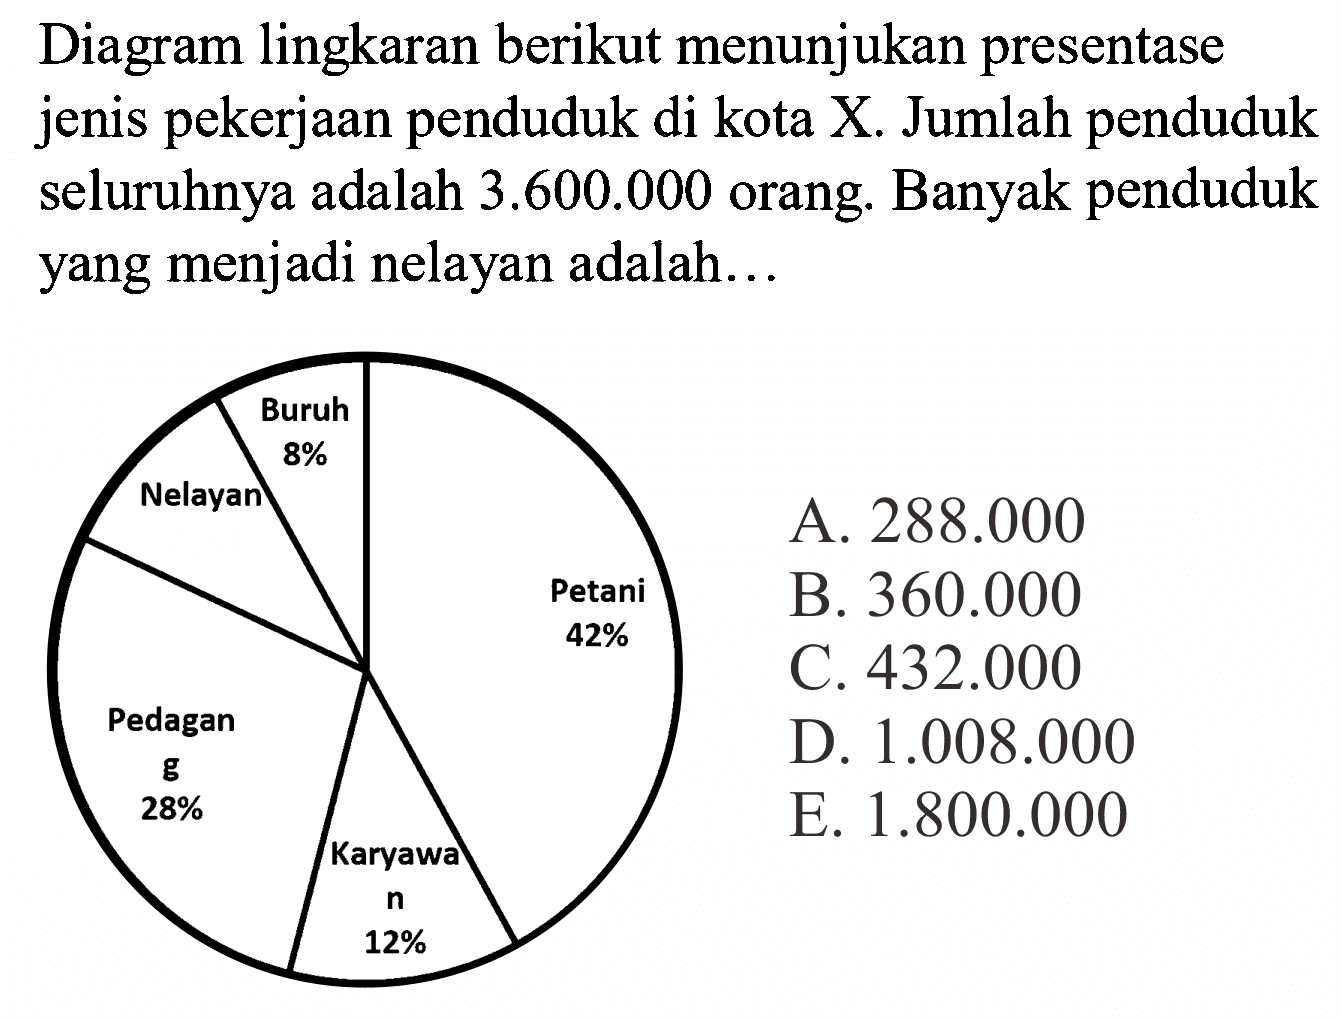 Diagram lingkaran berikut menunjukan presentase jenis pekerjaan penduduk di kota X. Jumlah penduduk seluruhnya adalah 3.600.000 orang. Banyak penduduk yang menjadi nelayan adalah...